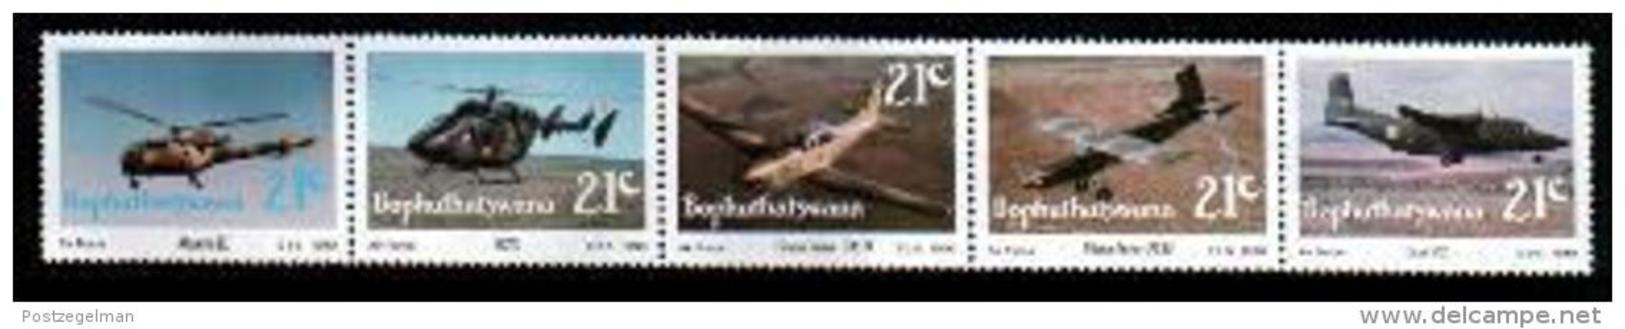 BOPHUTHATSWANA, 1990, MNH Stamp(s), Air Force, Nr(s)  252-256 - Bophuthatswana